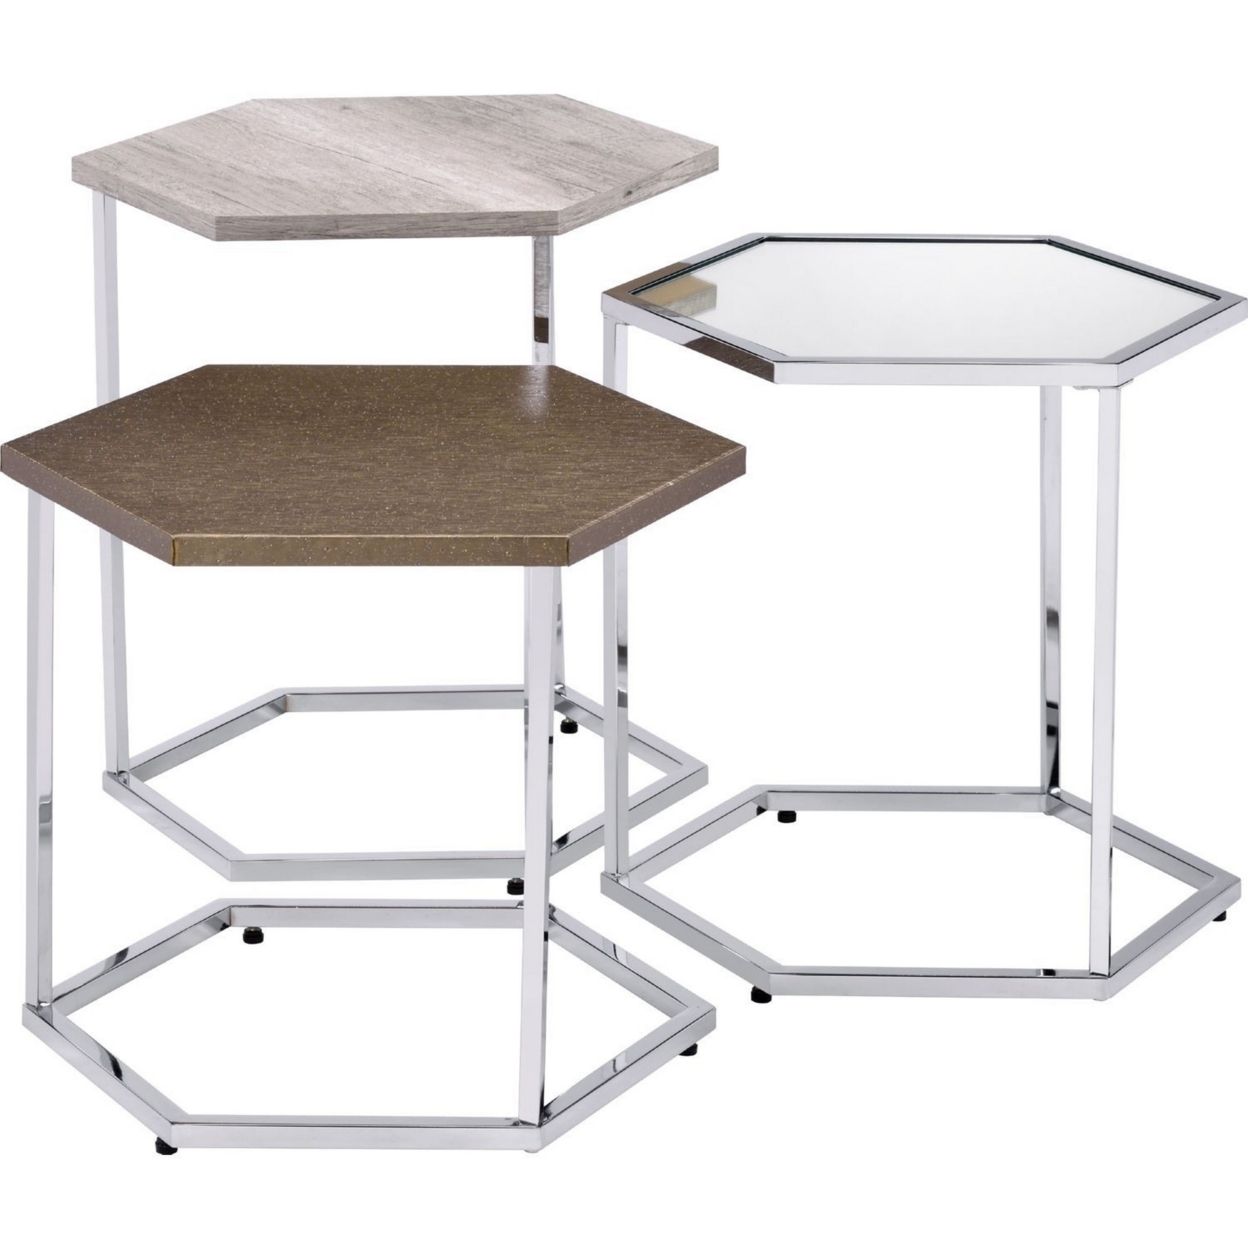 3 Piece Nesting Table With Hexagonal Shaped Metal Frame, Chrome- Saltoro Sherpi